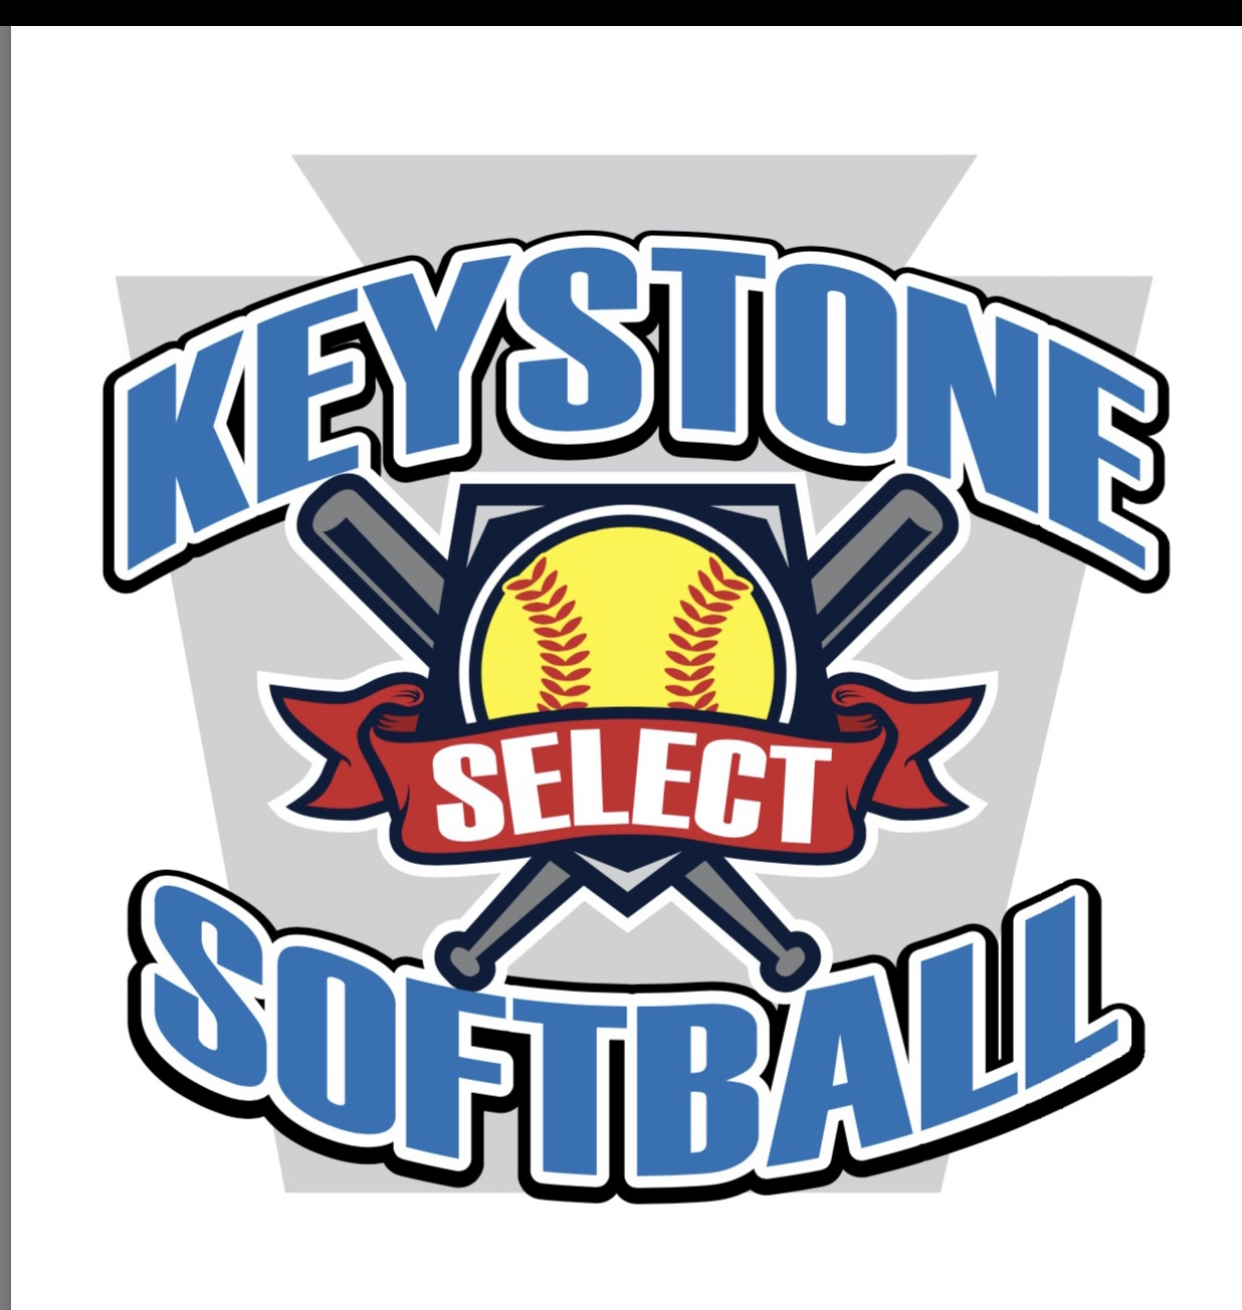 Keystone Select Softball Turn Two Tournament Drums-Scranton Area Logo